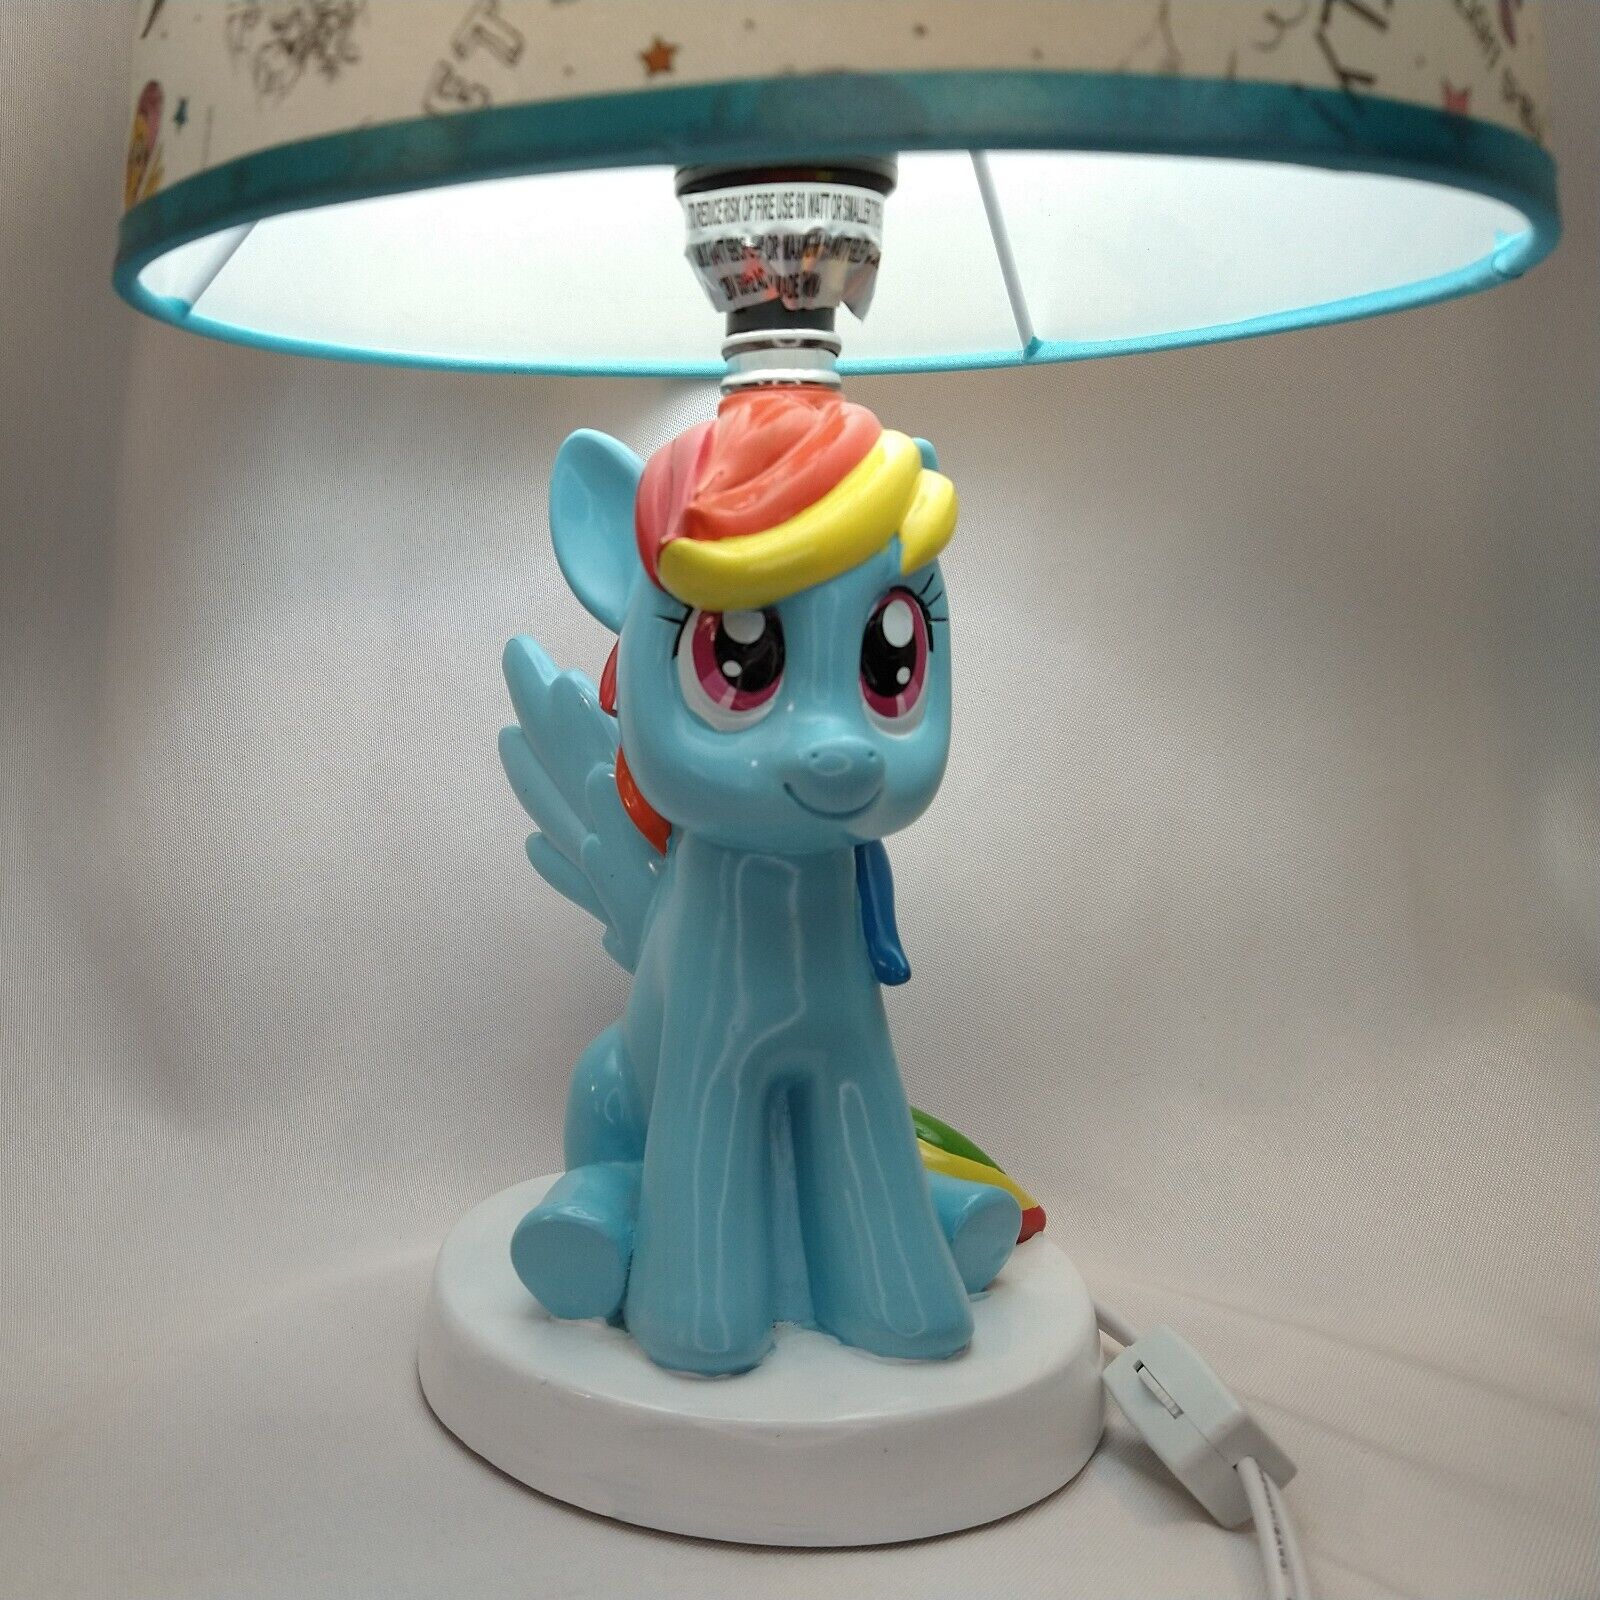 2017 Hasbro My Little Pony Lamp Rainbow Dash Lamp Shade “Let’s Fly” 15 inch